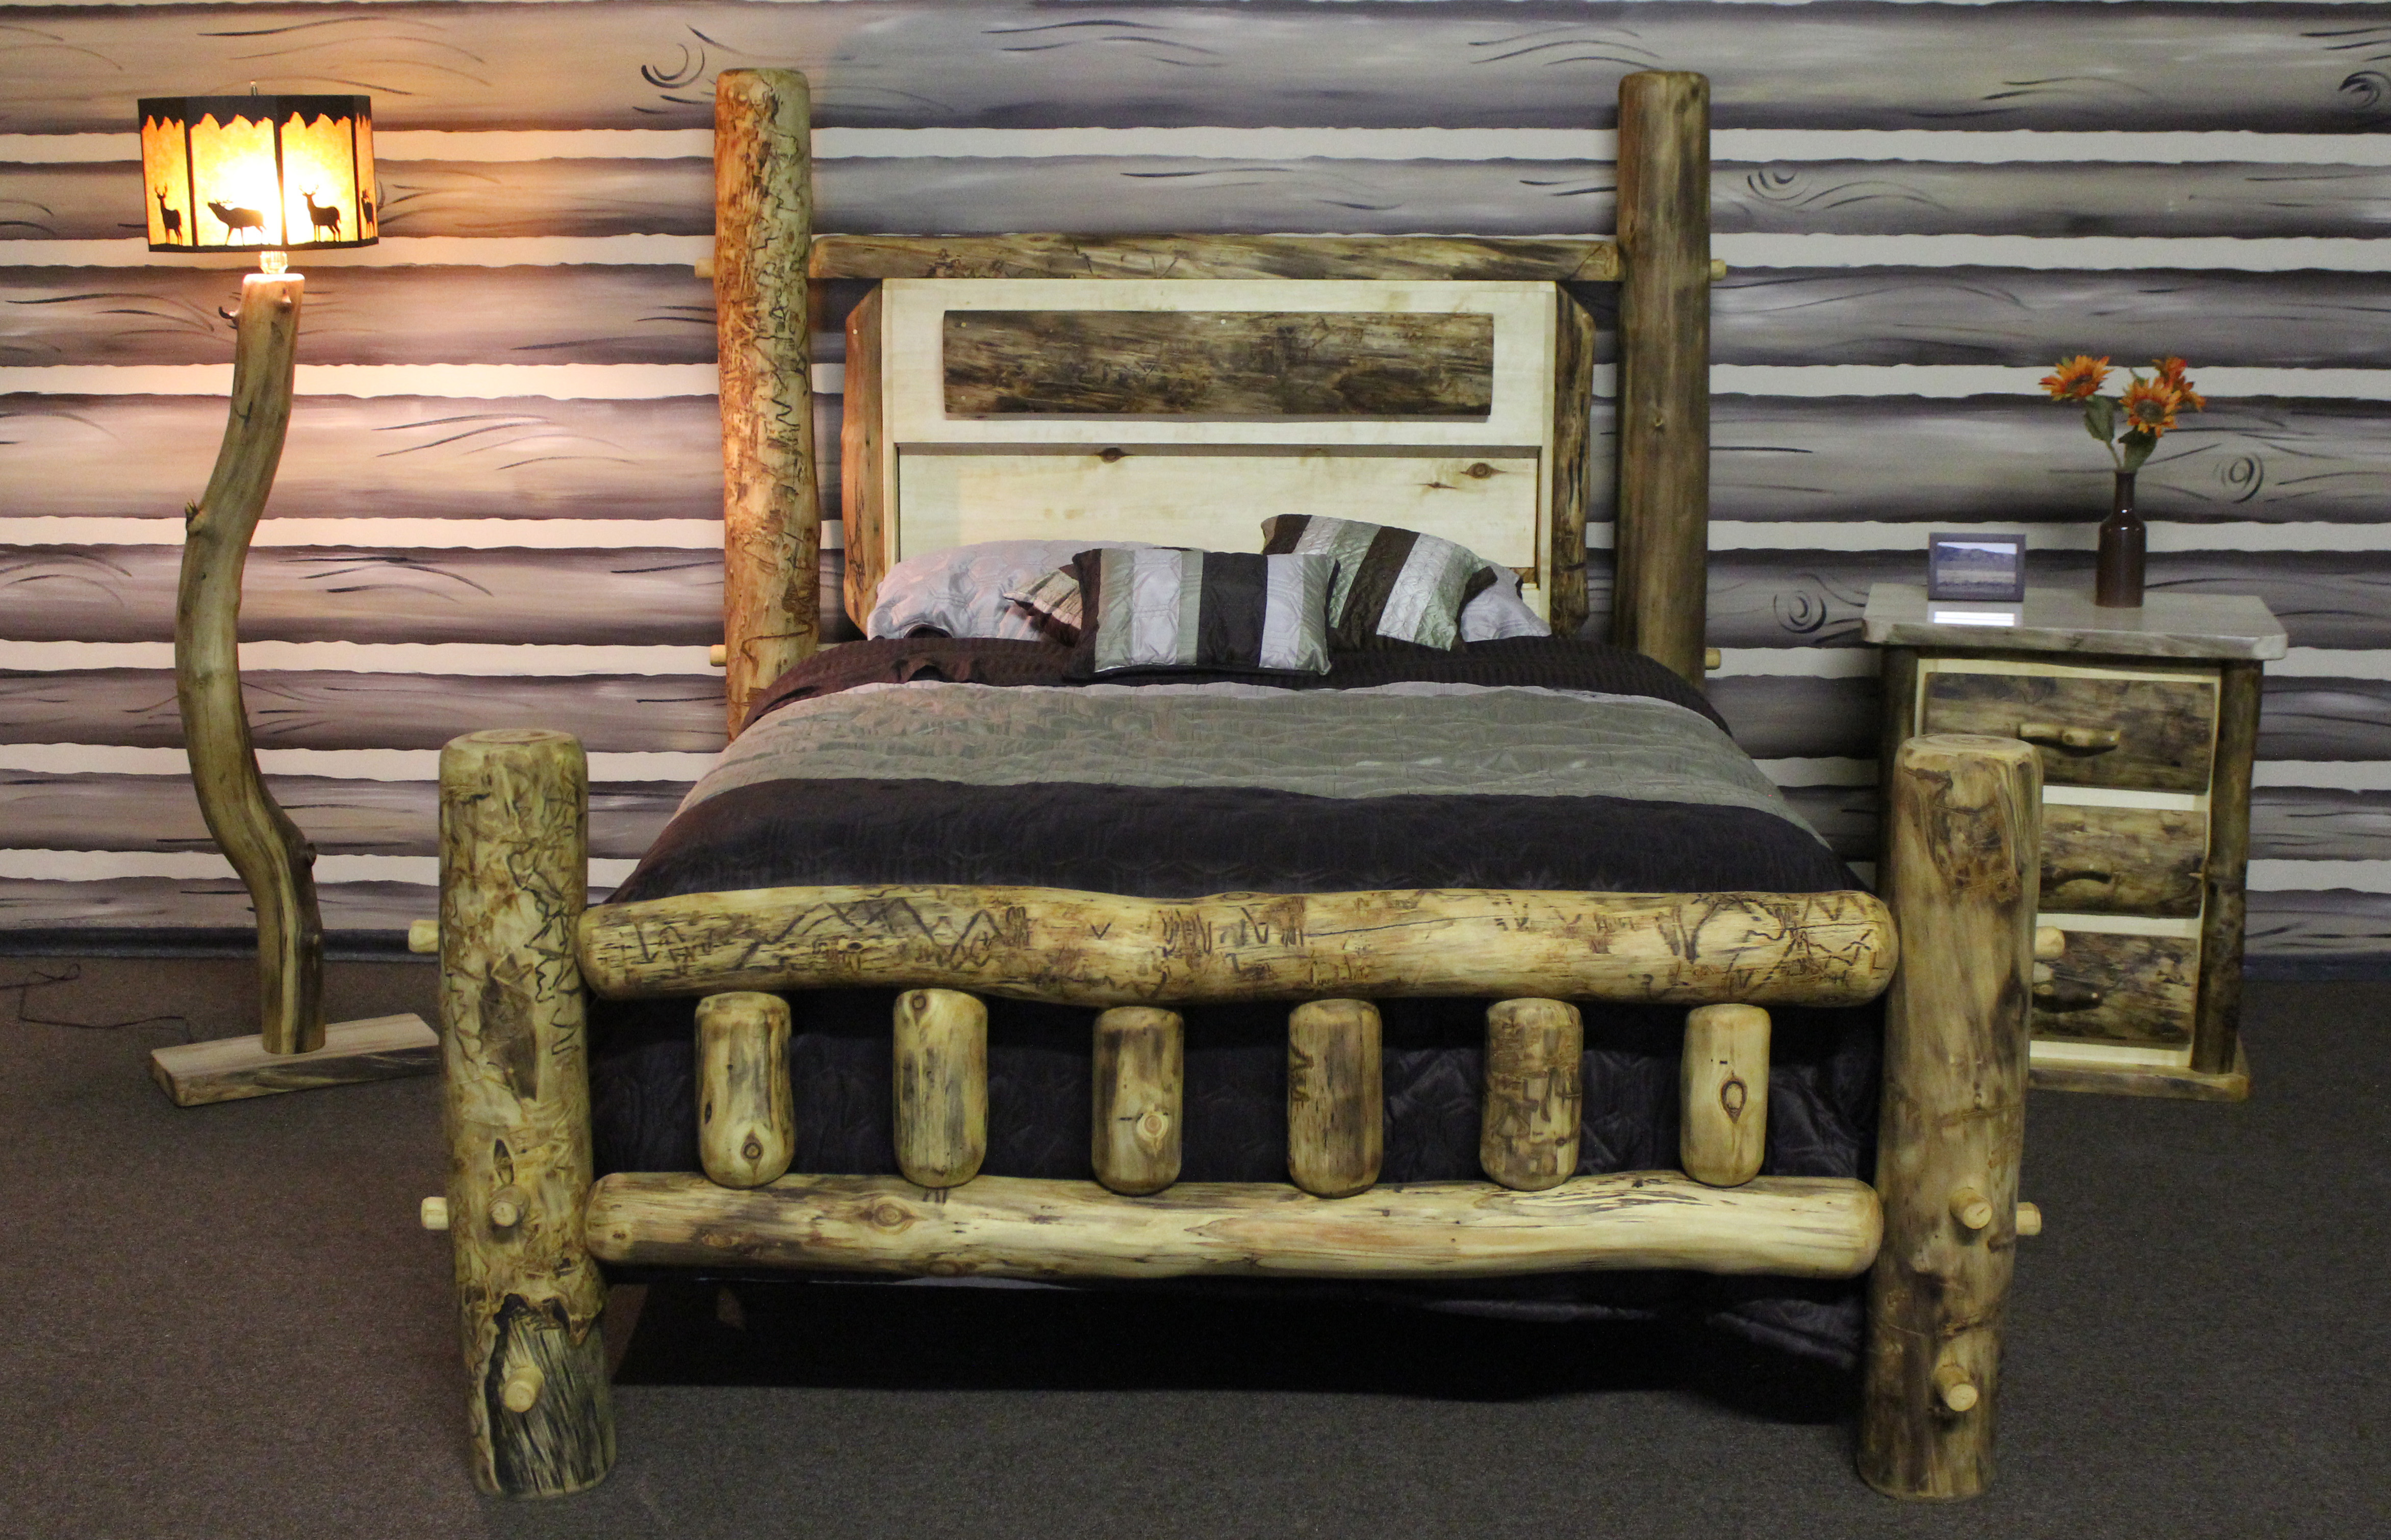  Wood Lodge Furniture, high-end, top quality Log Furniture Builder